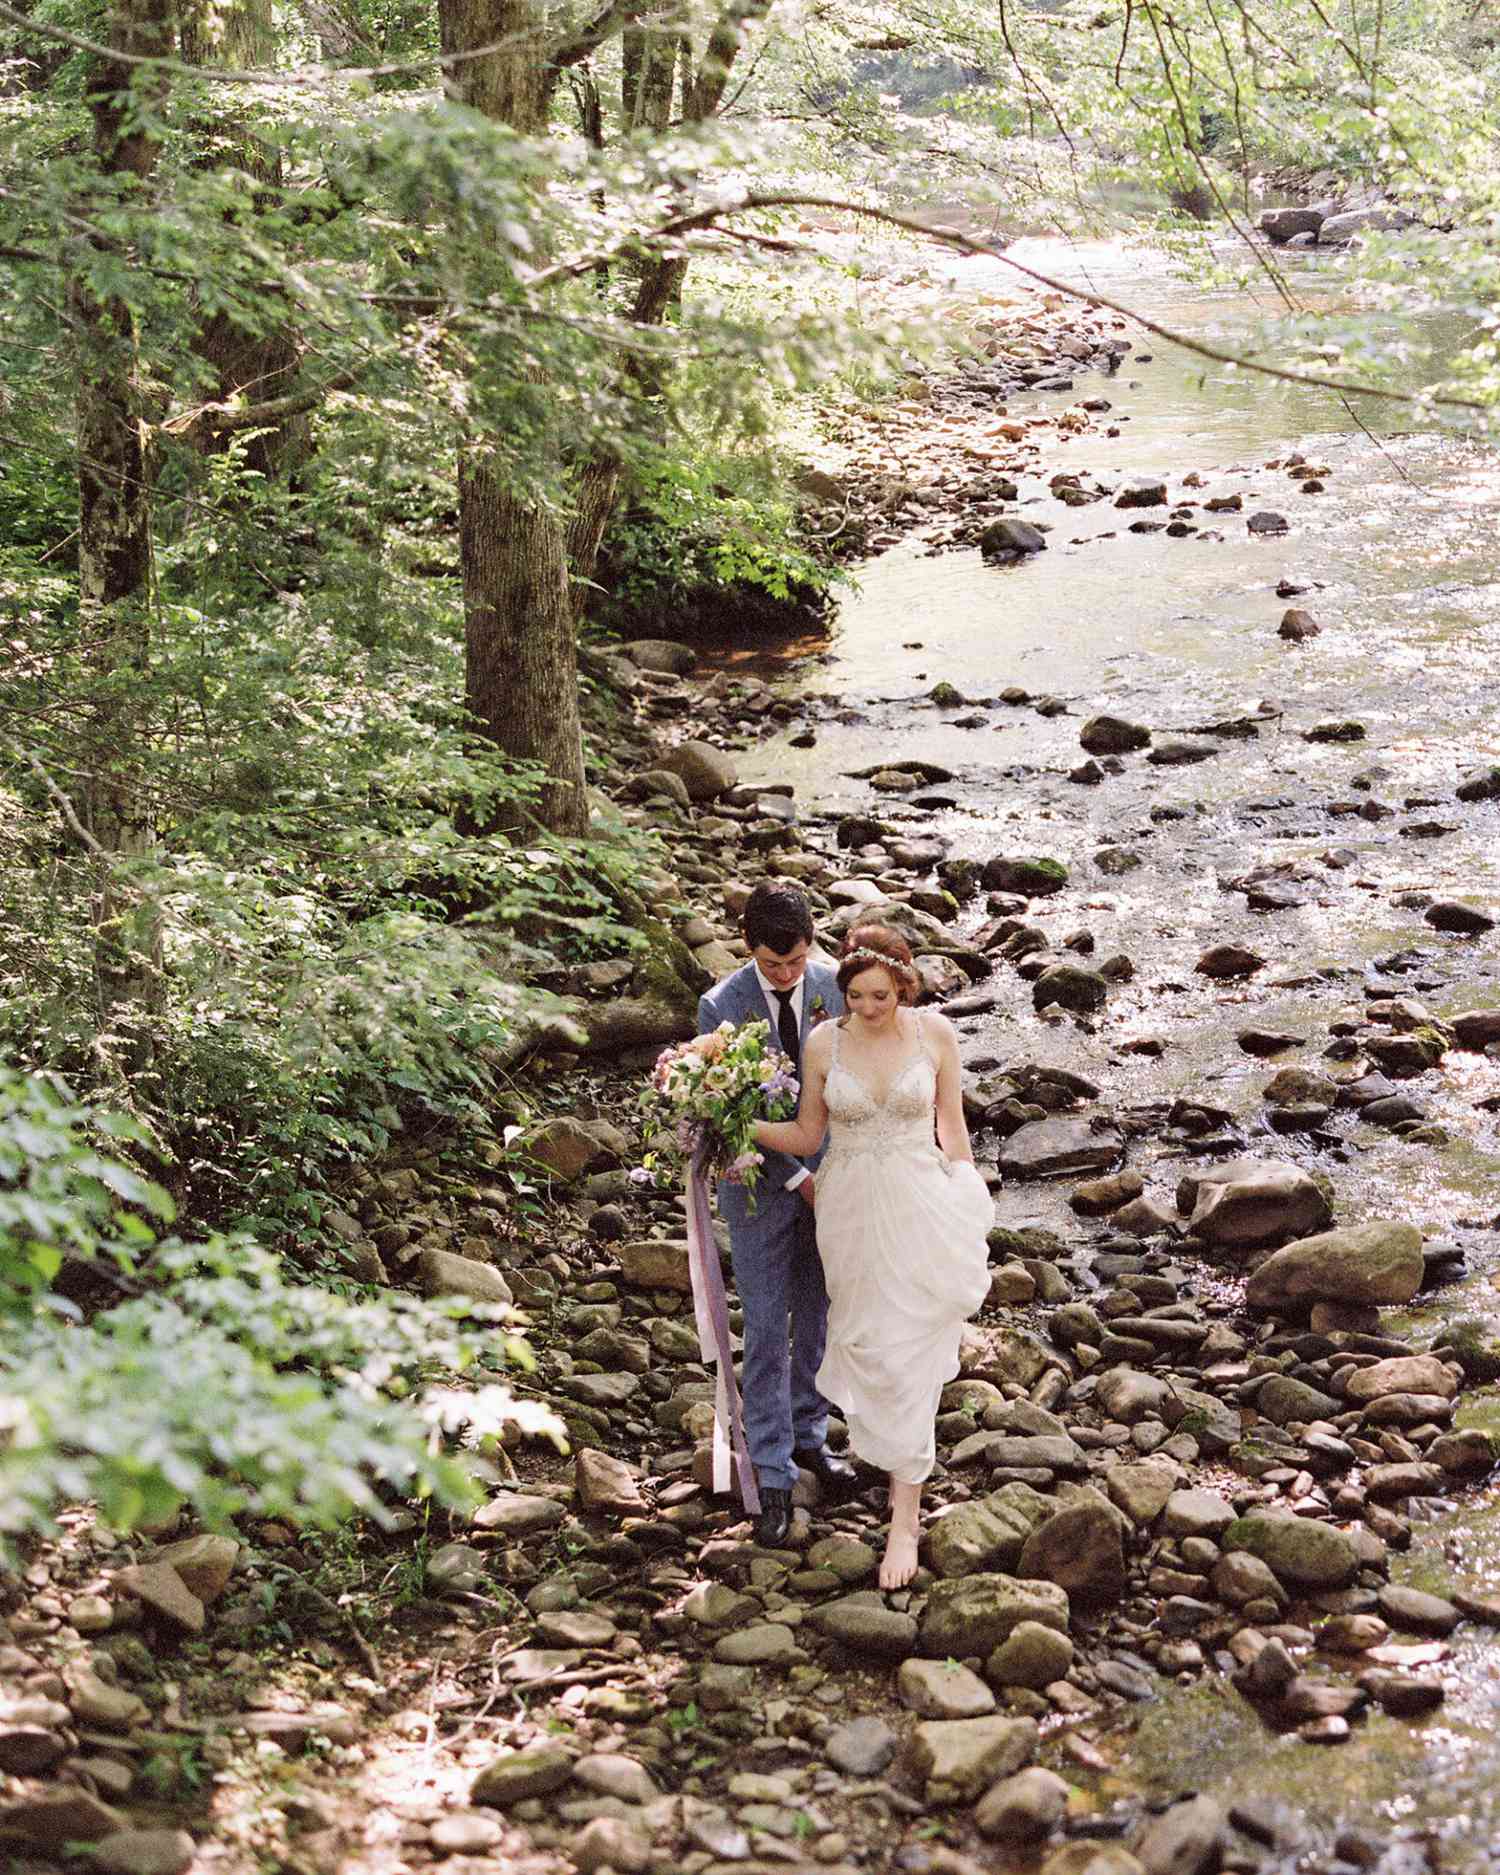 Larkin & Eric's Tennessee wedding - creek